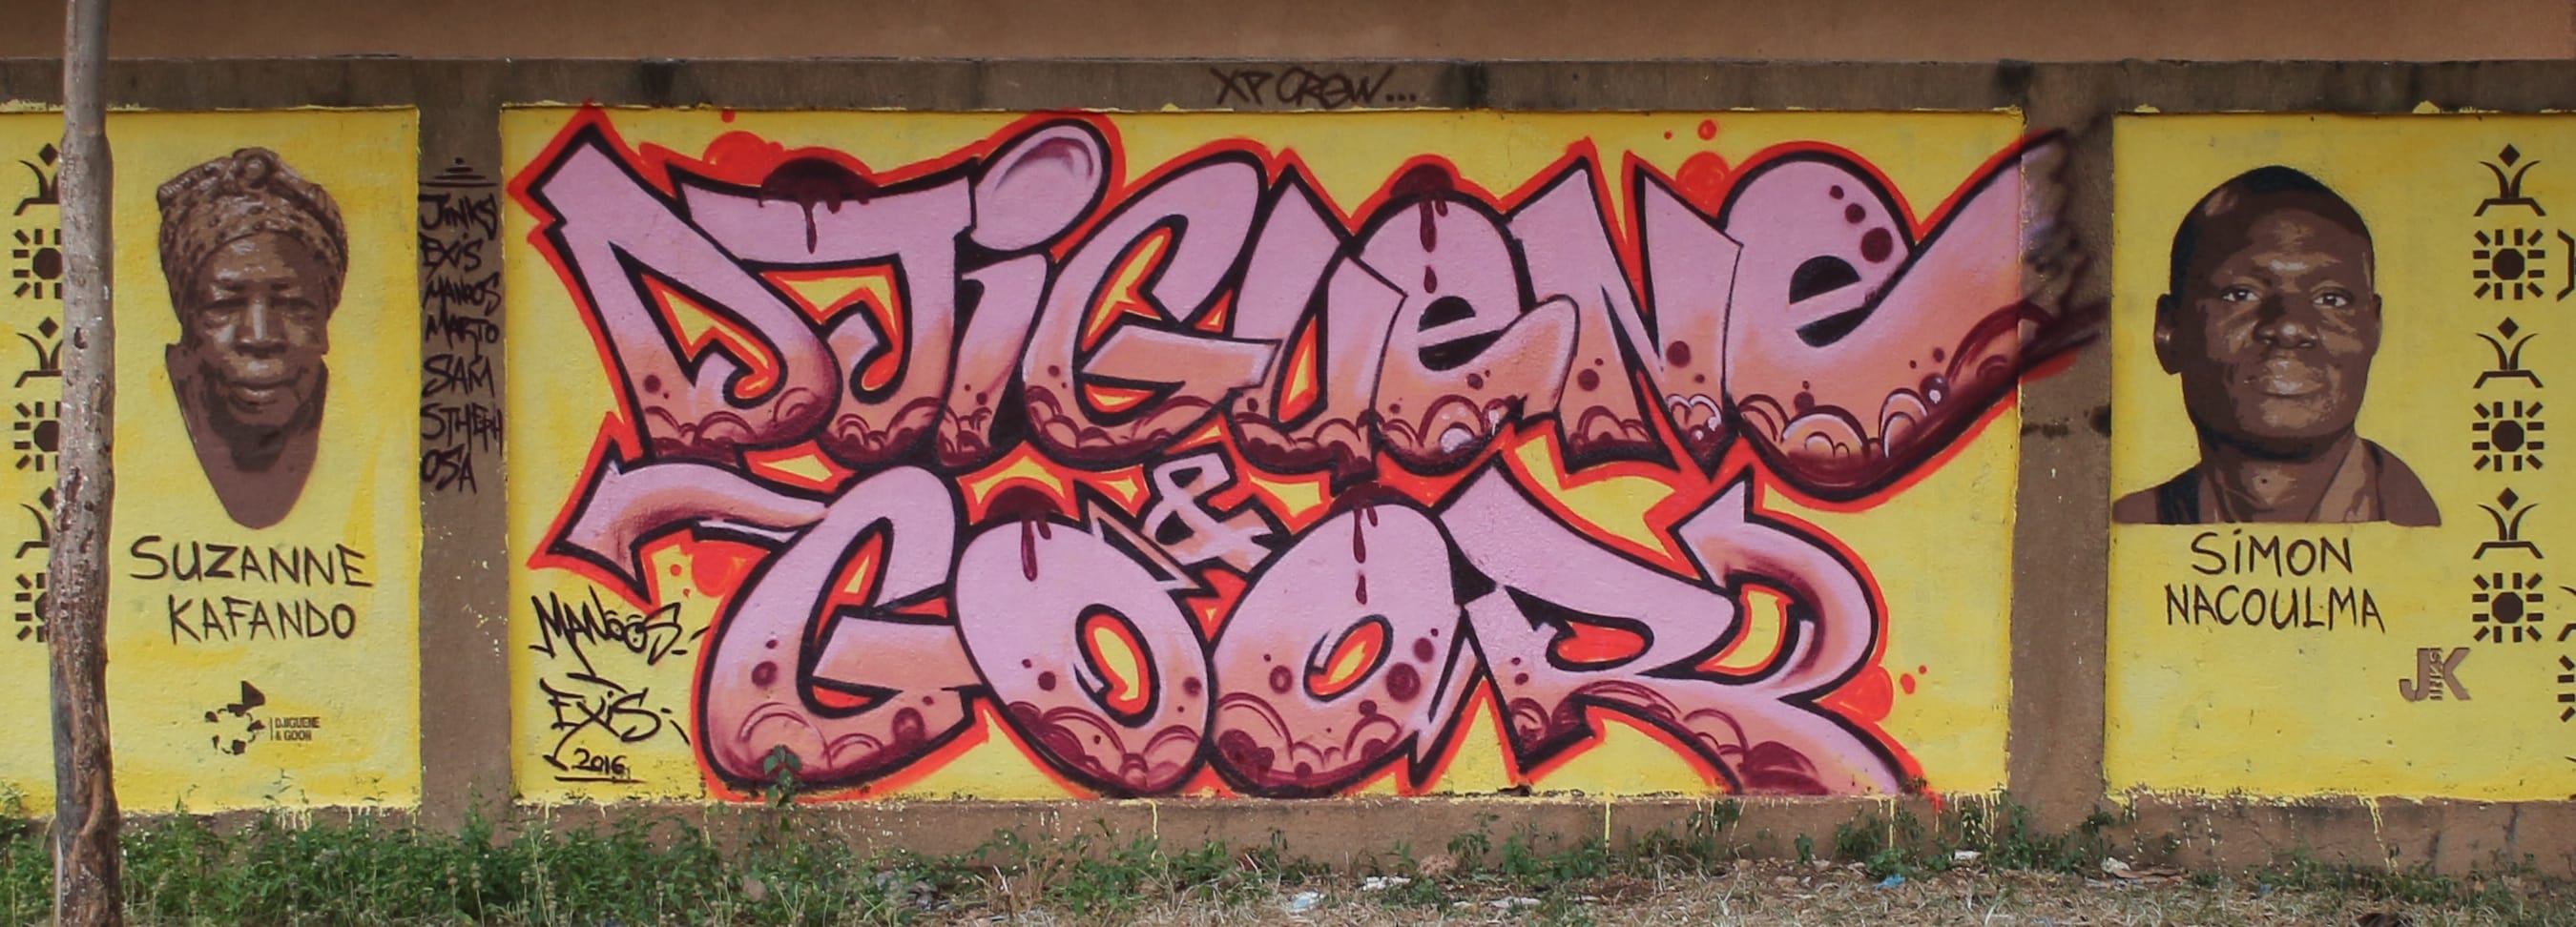 Graffiti 4646 Djiguene & Goor by the artist Jinks Kunst captured by Jinks Kunst in Ouagadougou Burkina Faso